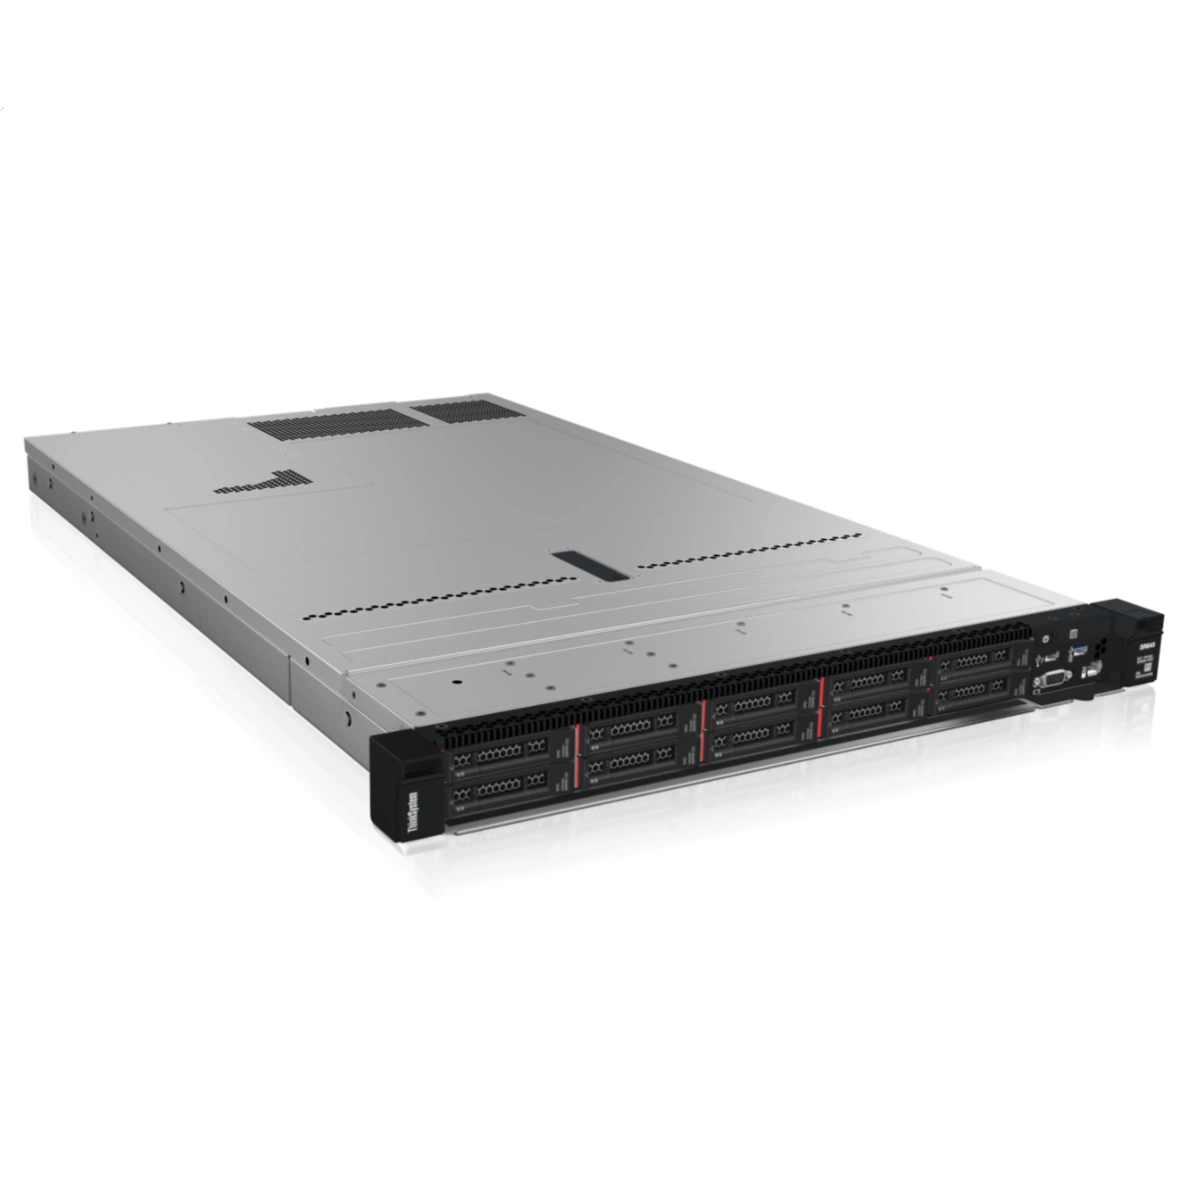 New and Original L Enovo Thinksystem Sr645 Server AMD Epyc 7352 1u Rack Server